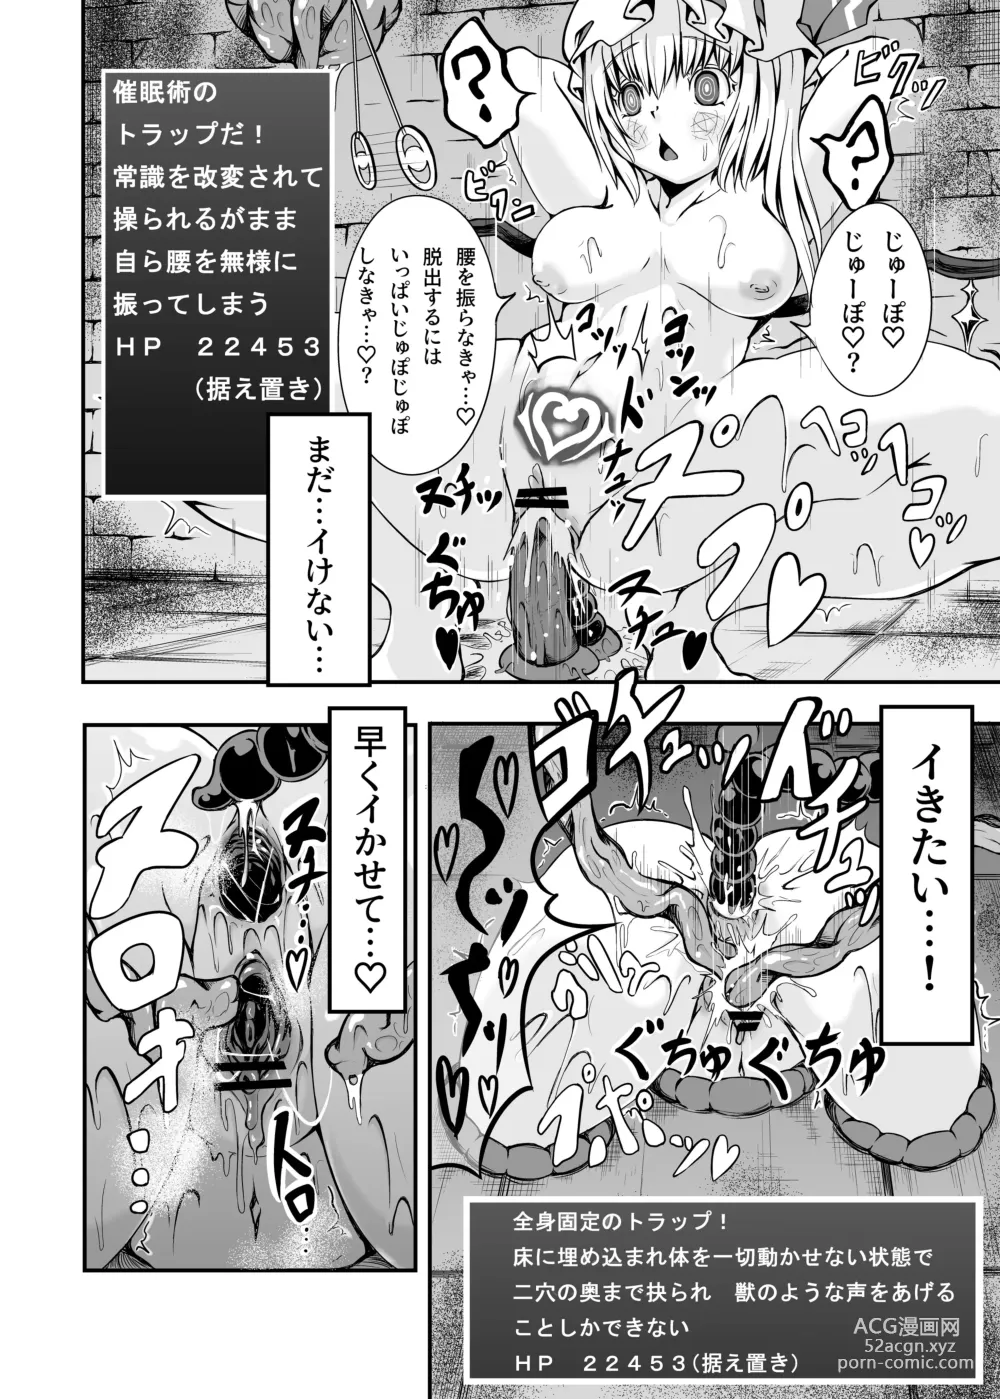 Page 15 of doujinshi Flan-chan and ETD